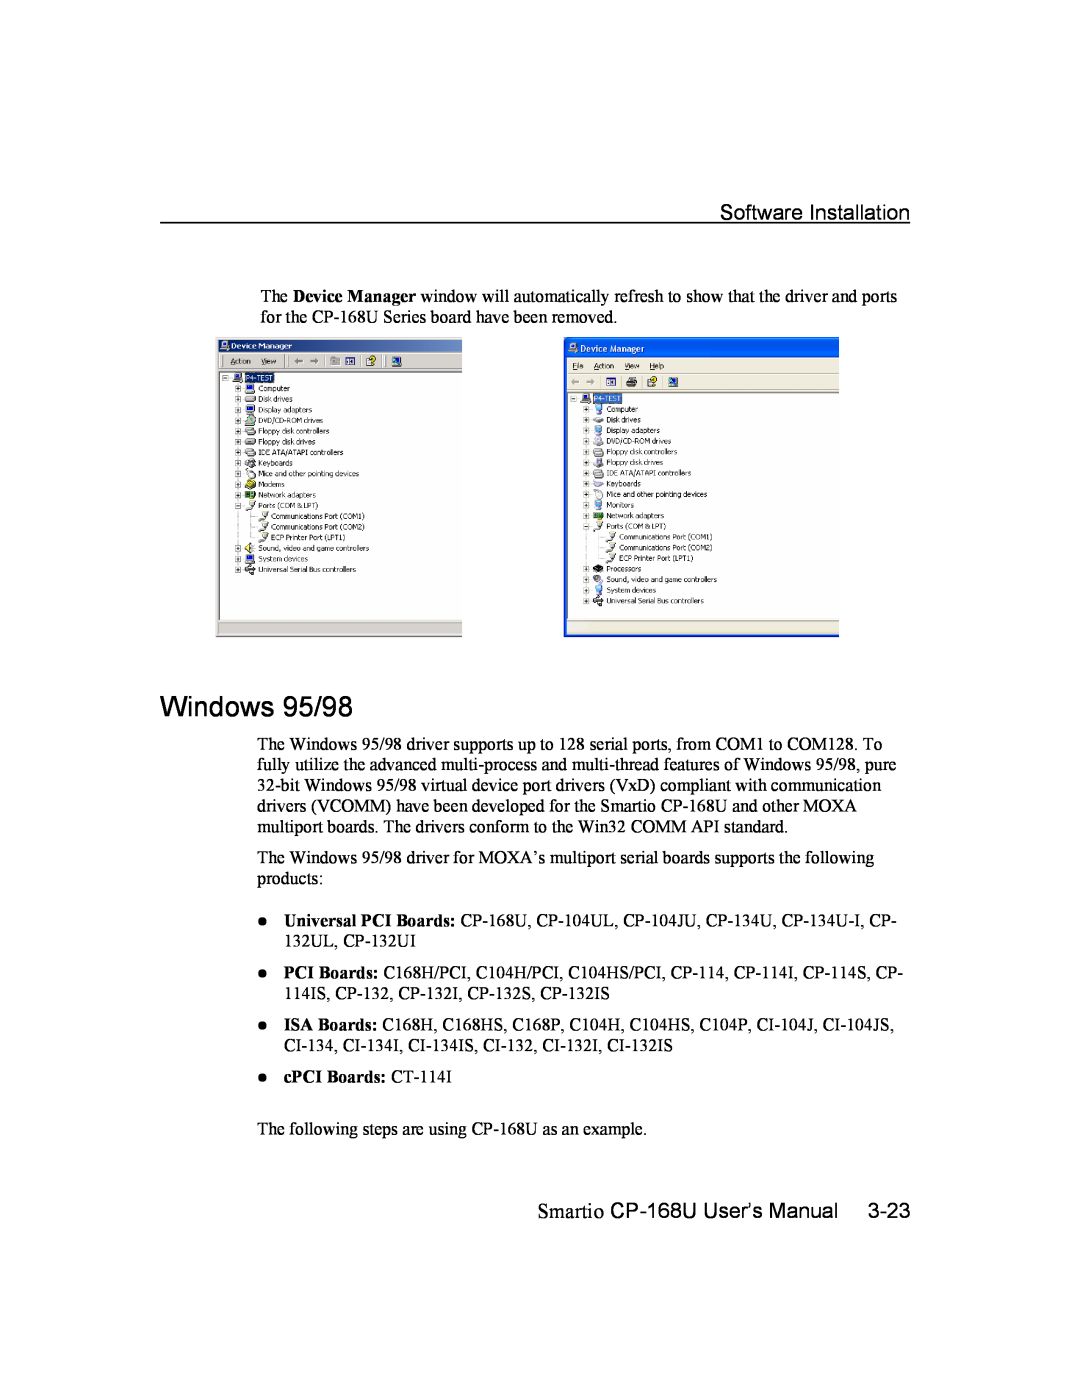 Moxa Technologies user manual Windows 95/98, Software Installation, Smartio CP-168U User’s Manual 